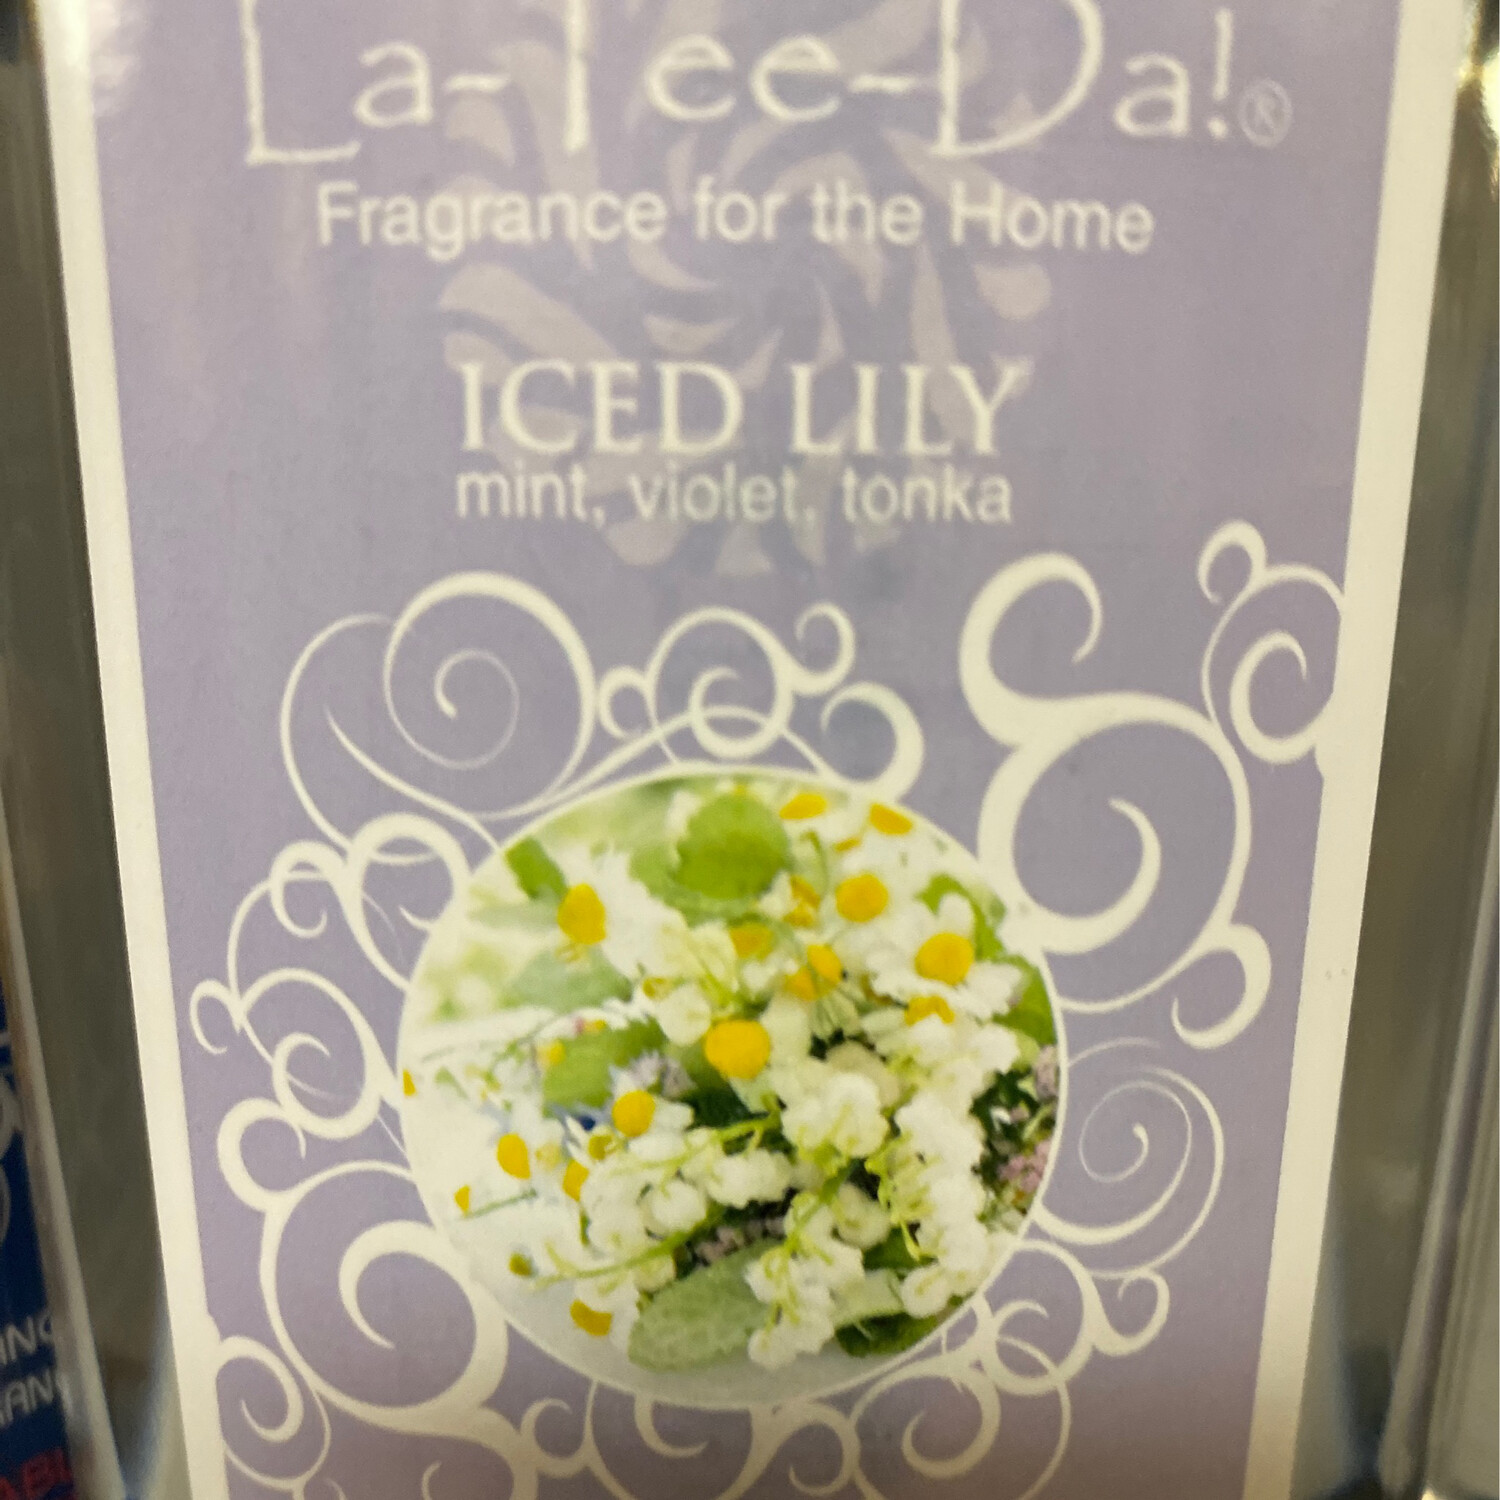 La Tee Da Iced Lily